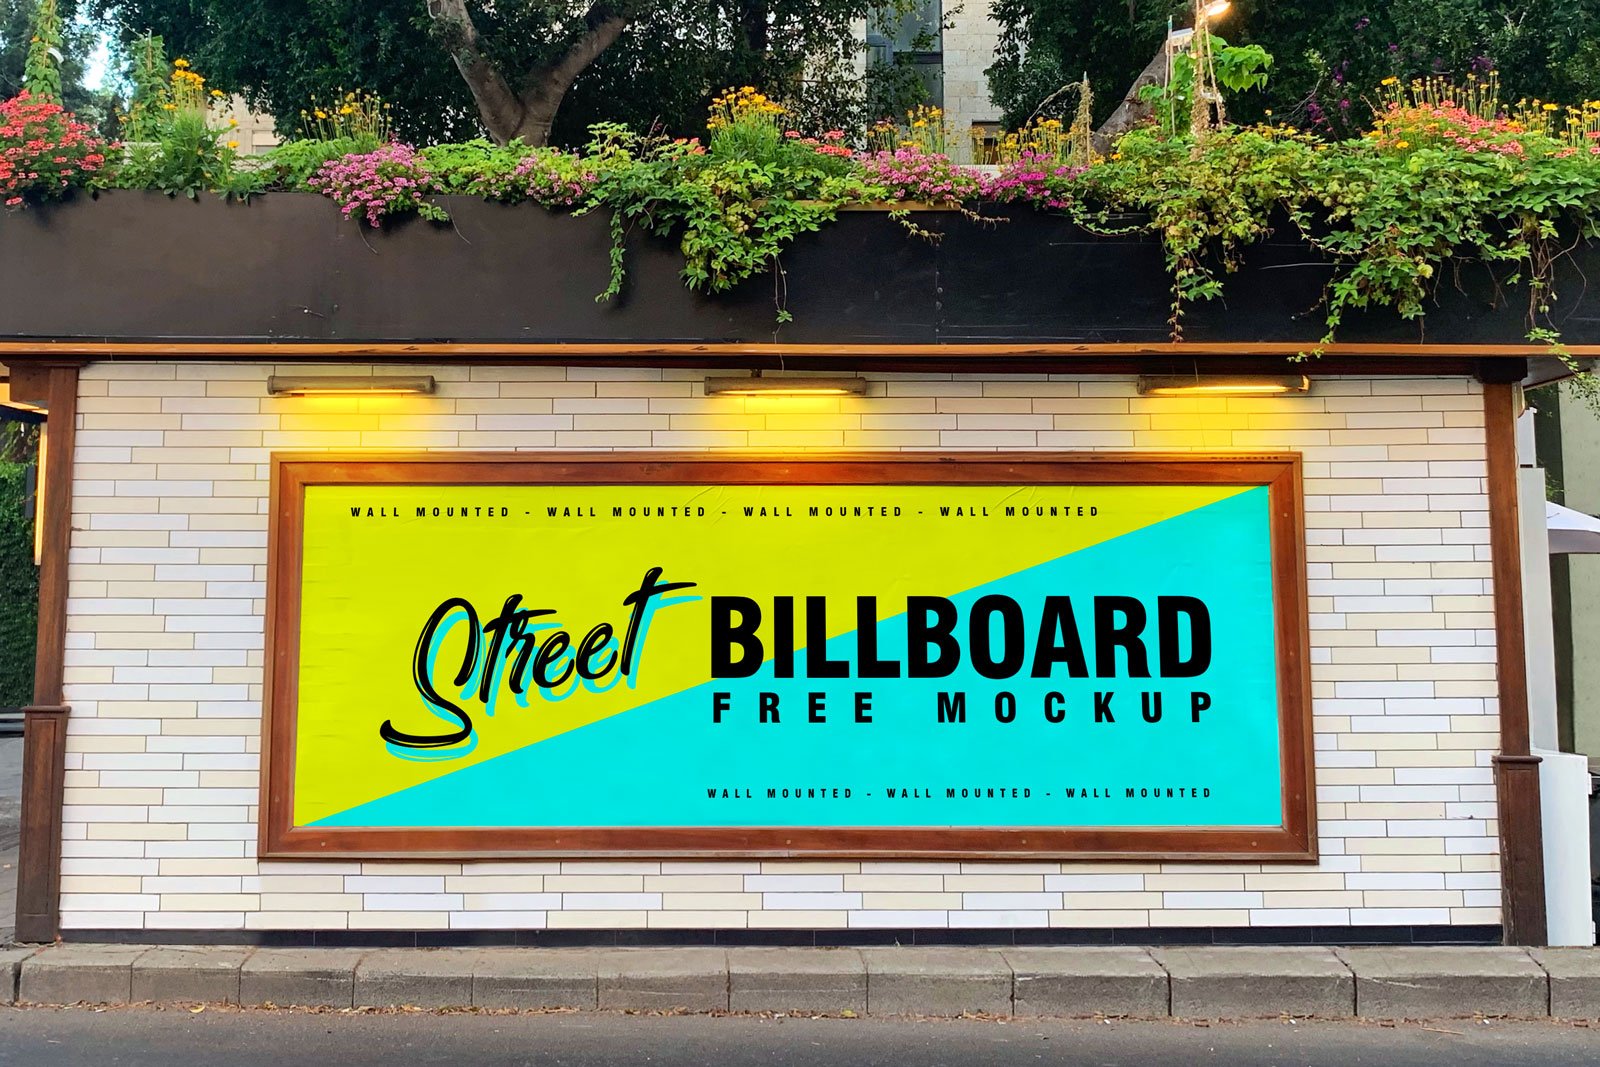 Download Free Street Wall Mounted Billboard Mockup PSD | Designbolts